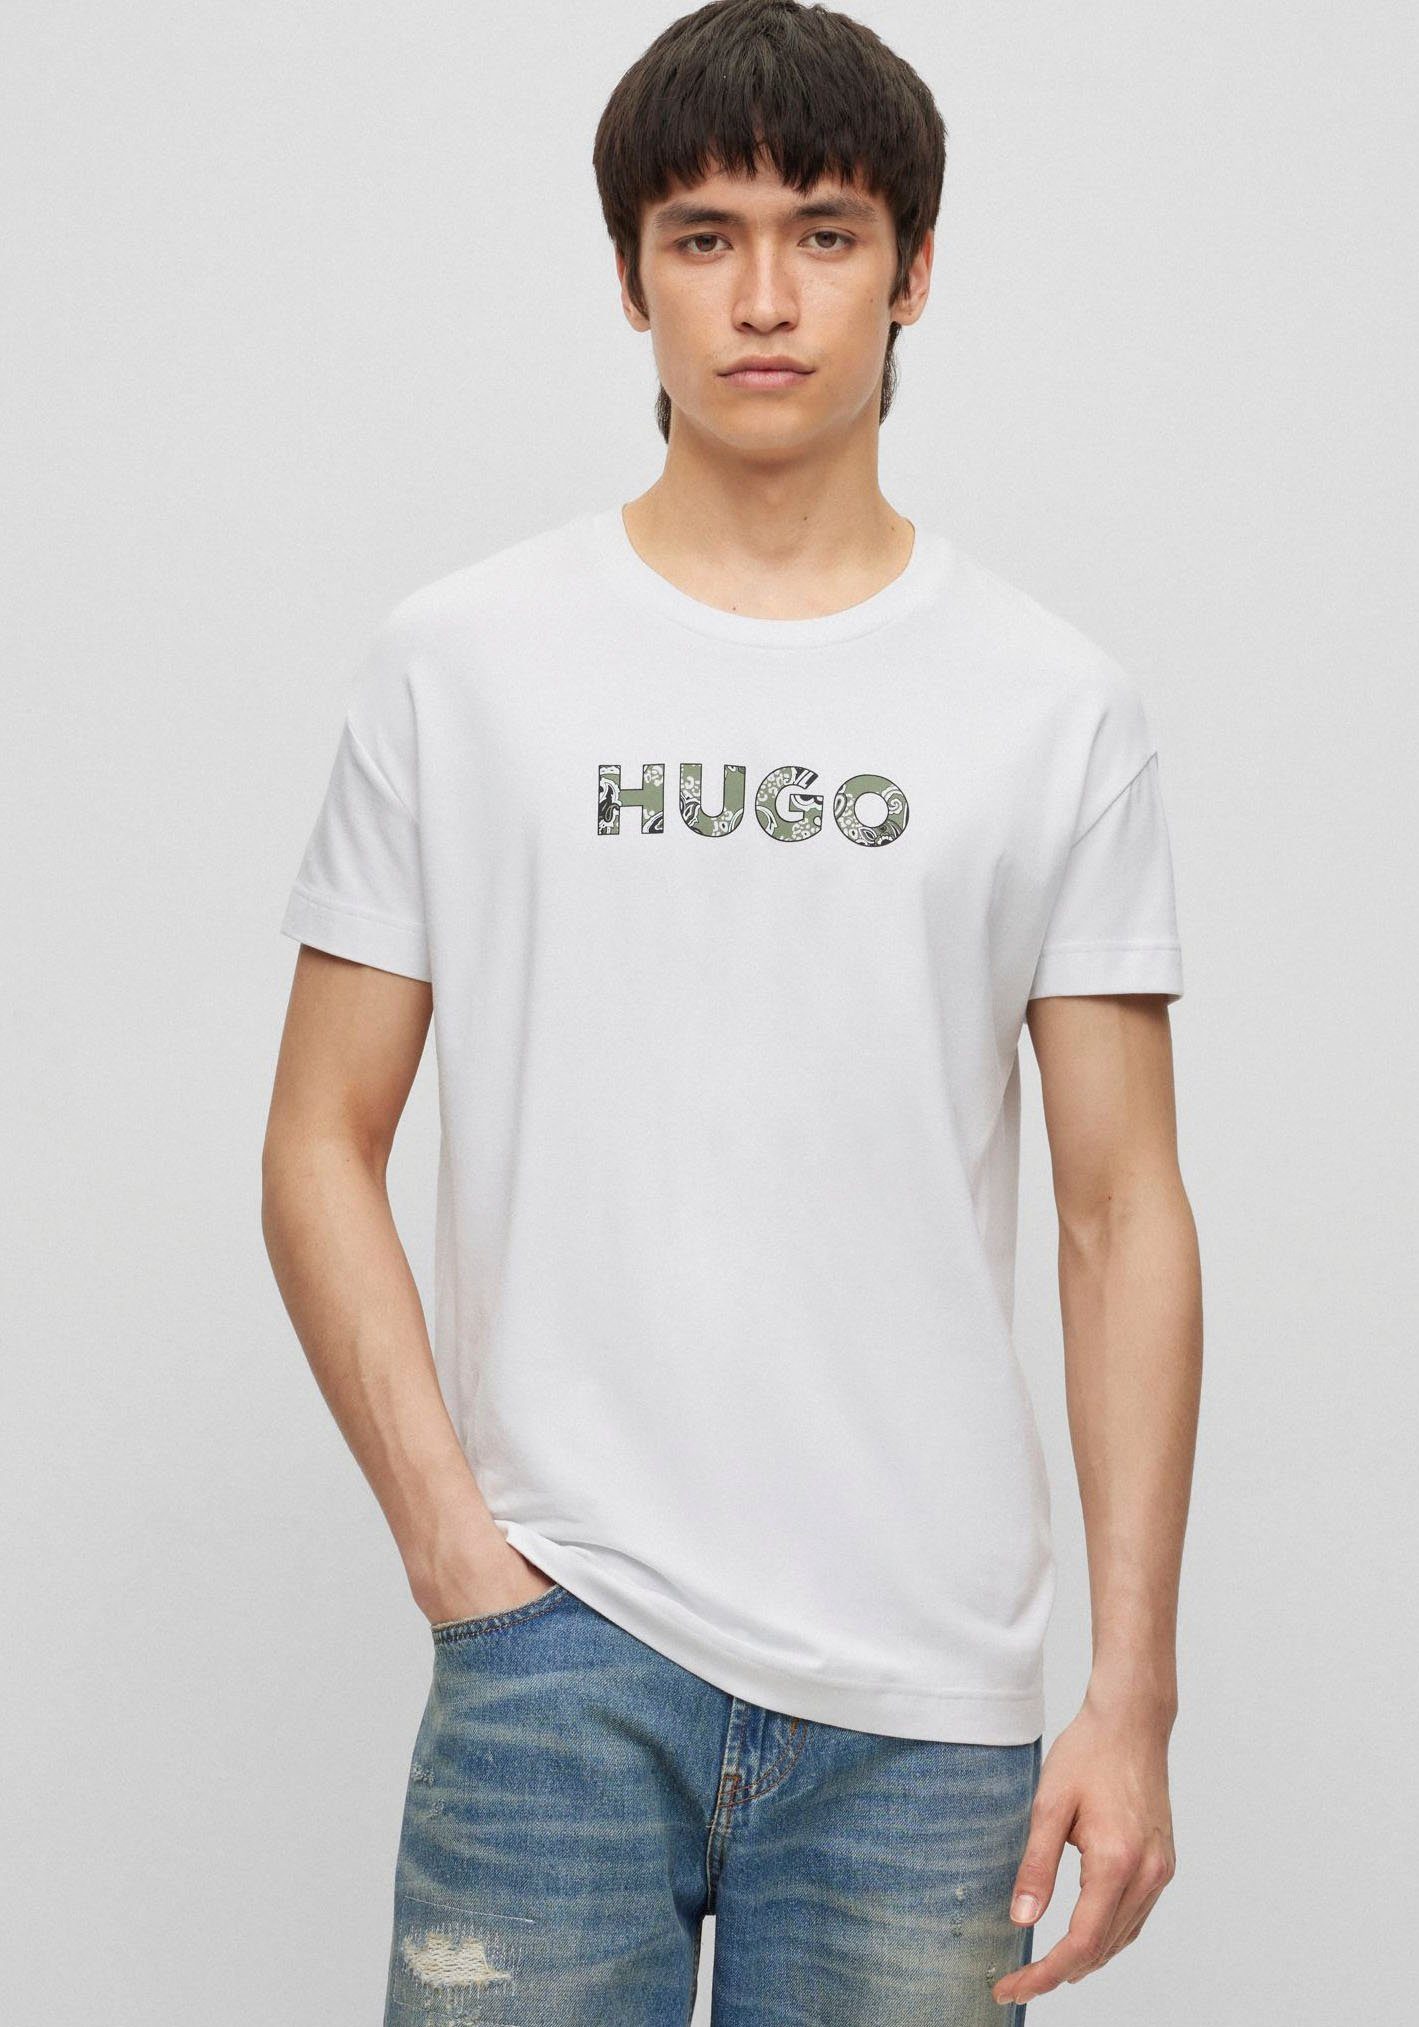 HUGO T-Shirt Paisley T-Shirt mit Paisley-Logodruck